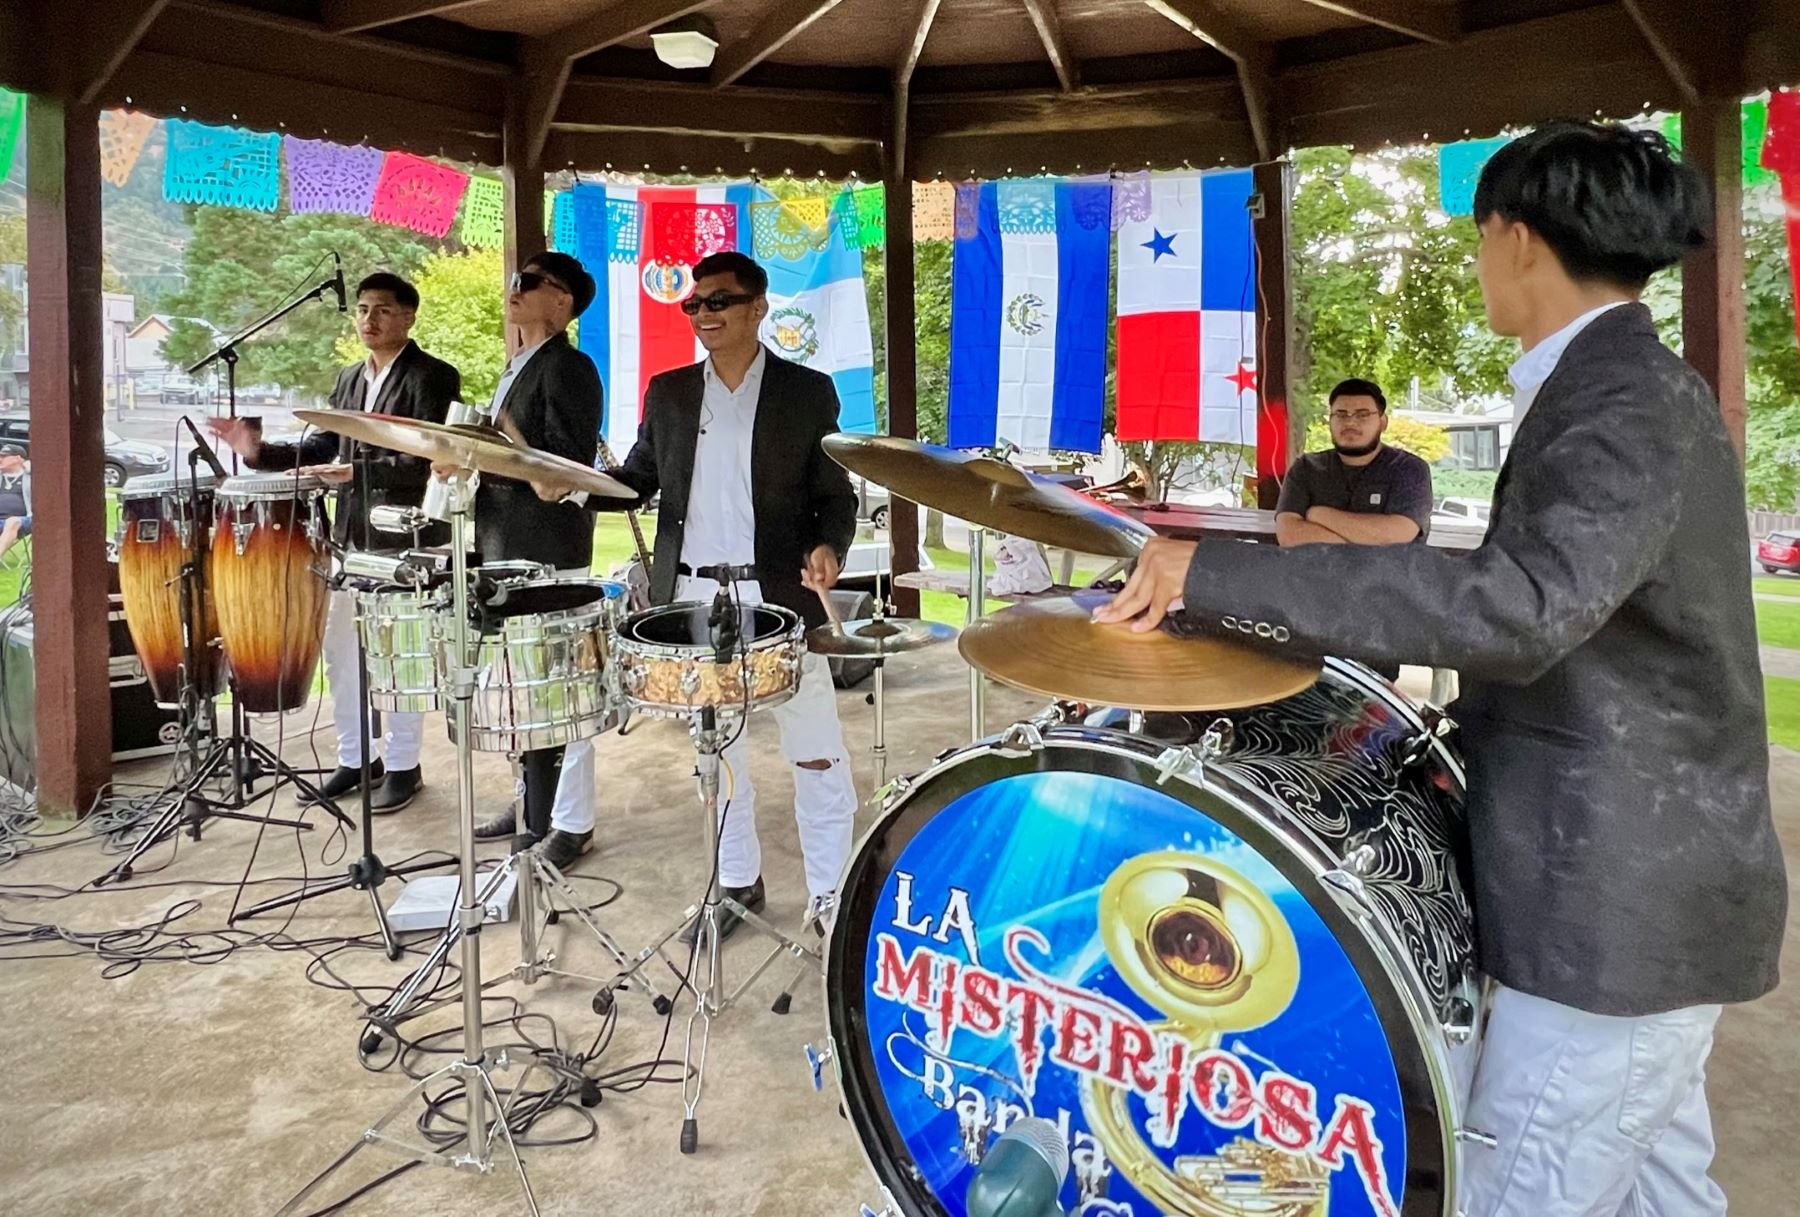 Headliner group La Misteriosa Banda 360 fills the night with music.